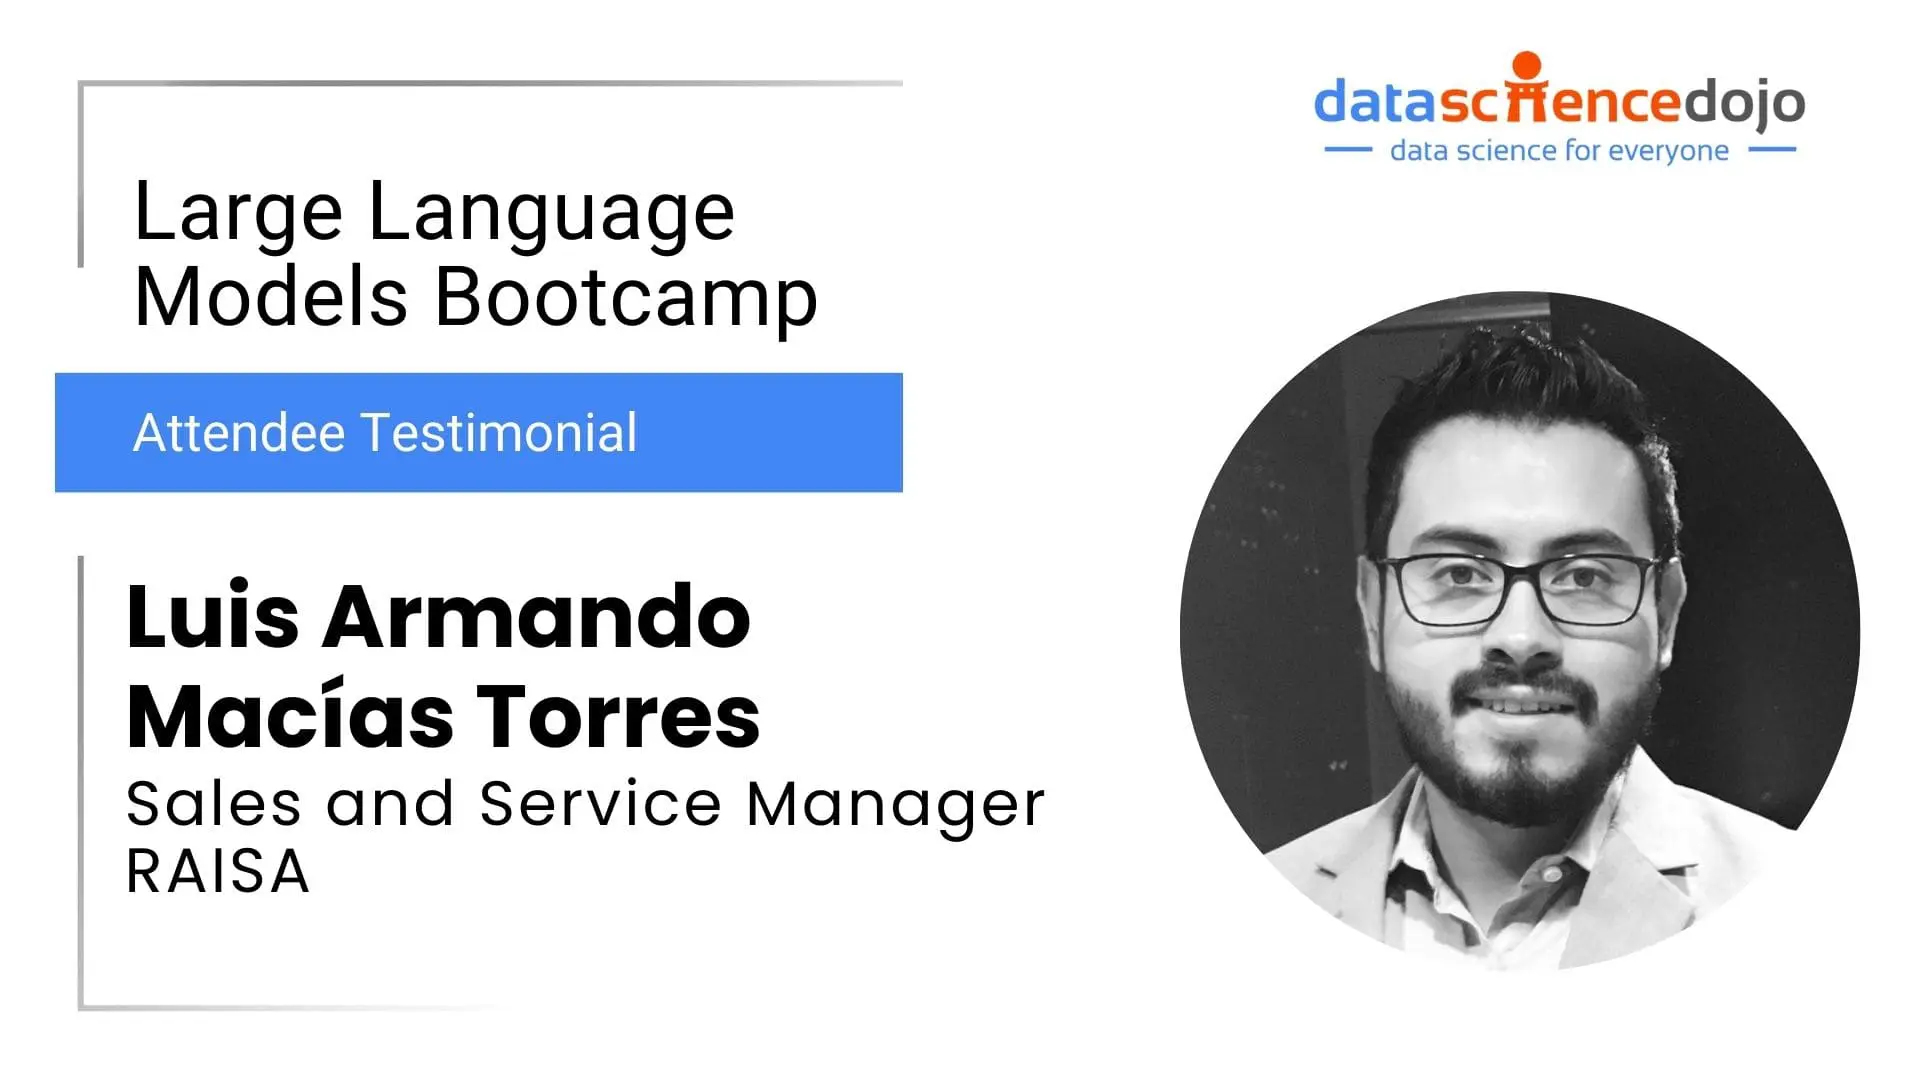 Luis Armando | Large Language Models Bootcamp | Data Science Dojo